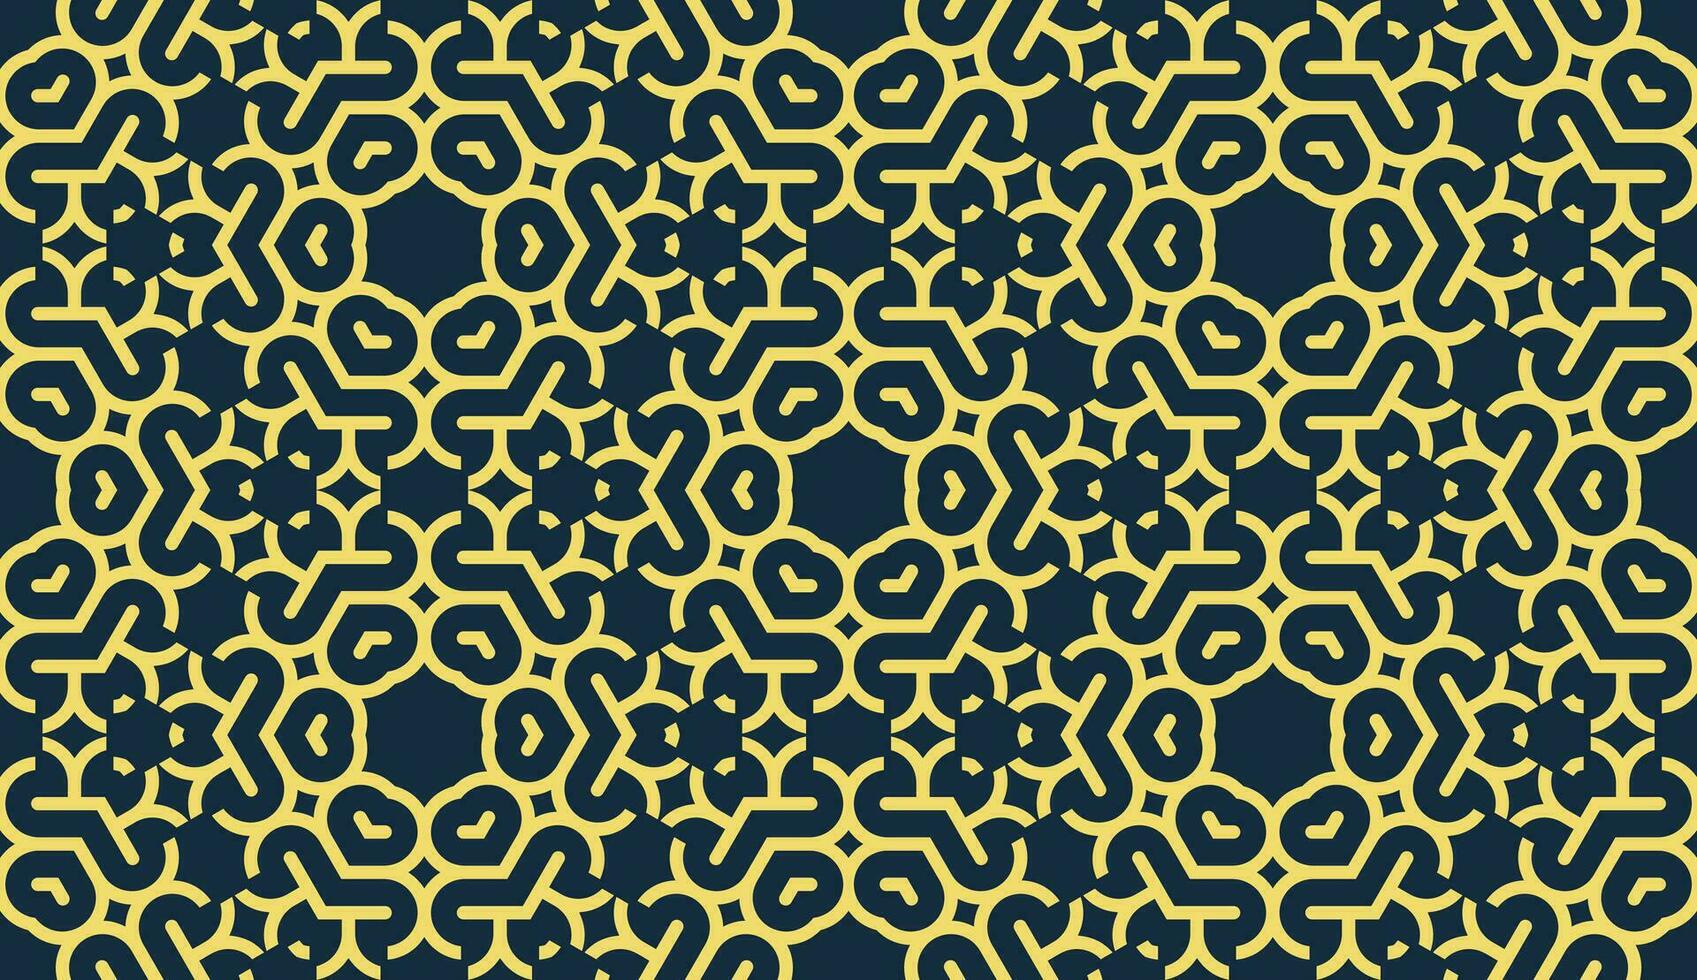 abstract geometric yellow black seamless pattern vector